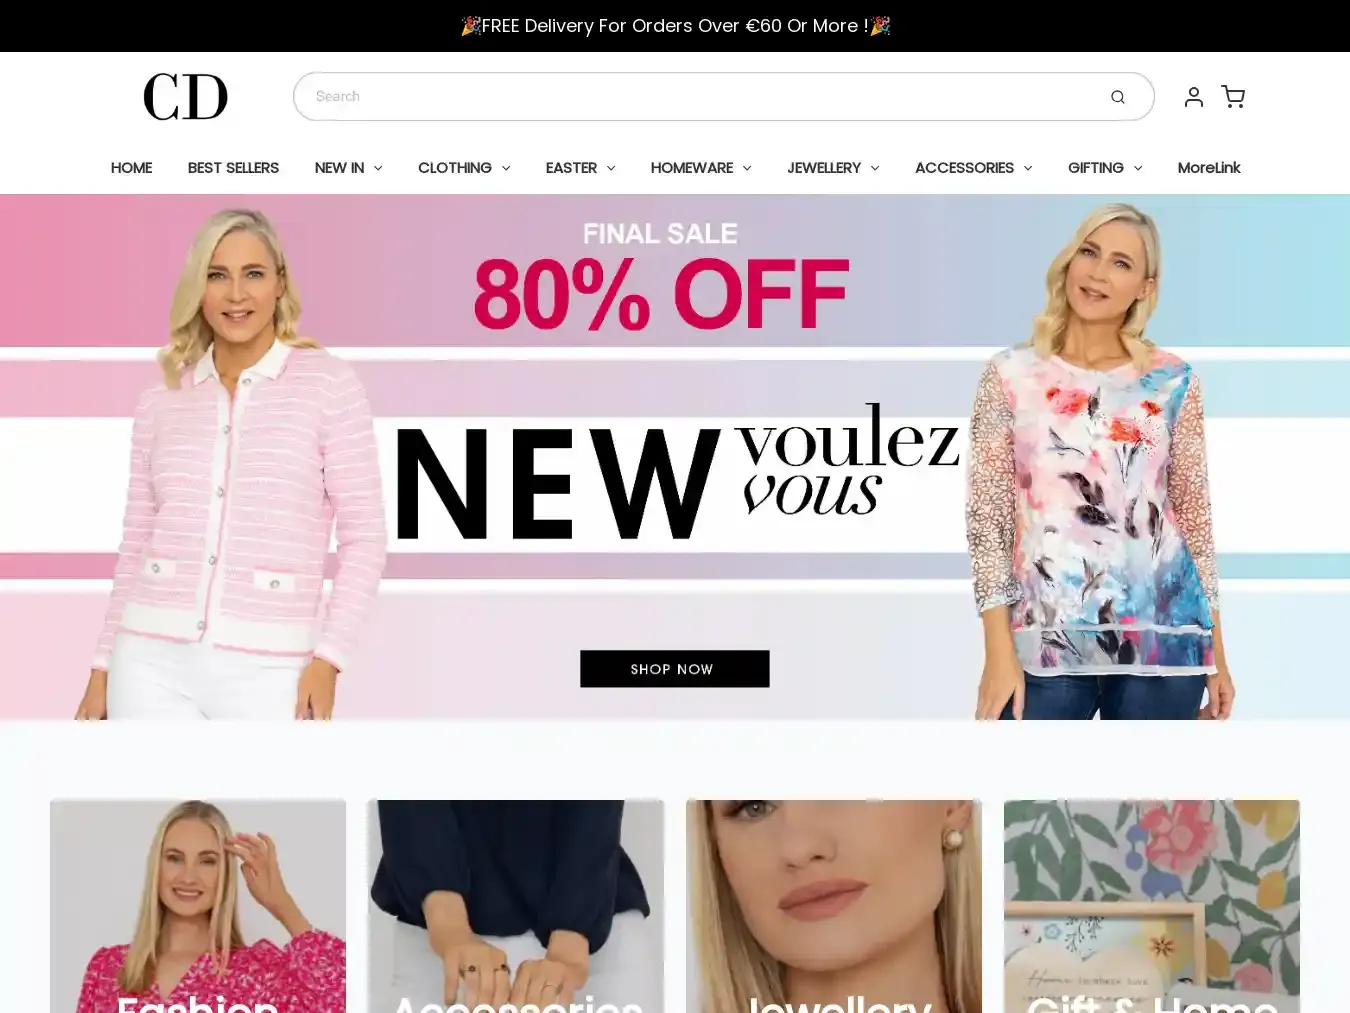 Cdonlinedeal.com Fraudulent Fashion website.